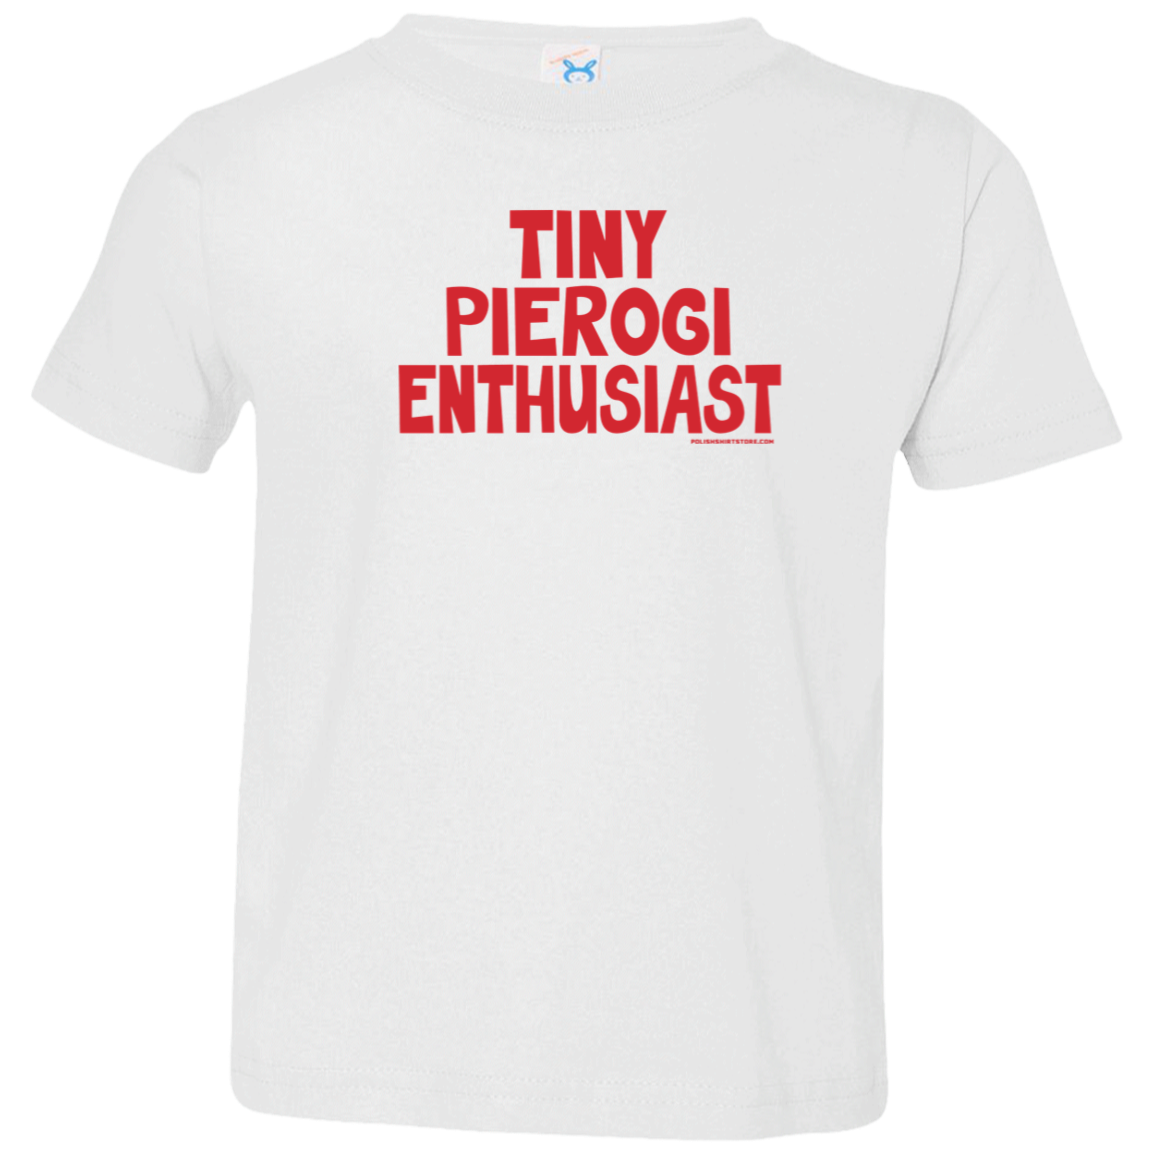 Tiny Pierogi Enthusiast Infant & Toddler T-Shirt Apparel CustomCat Toddler T-Shirt White 2T